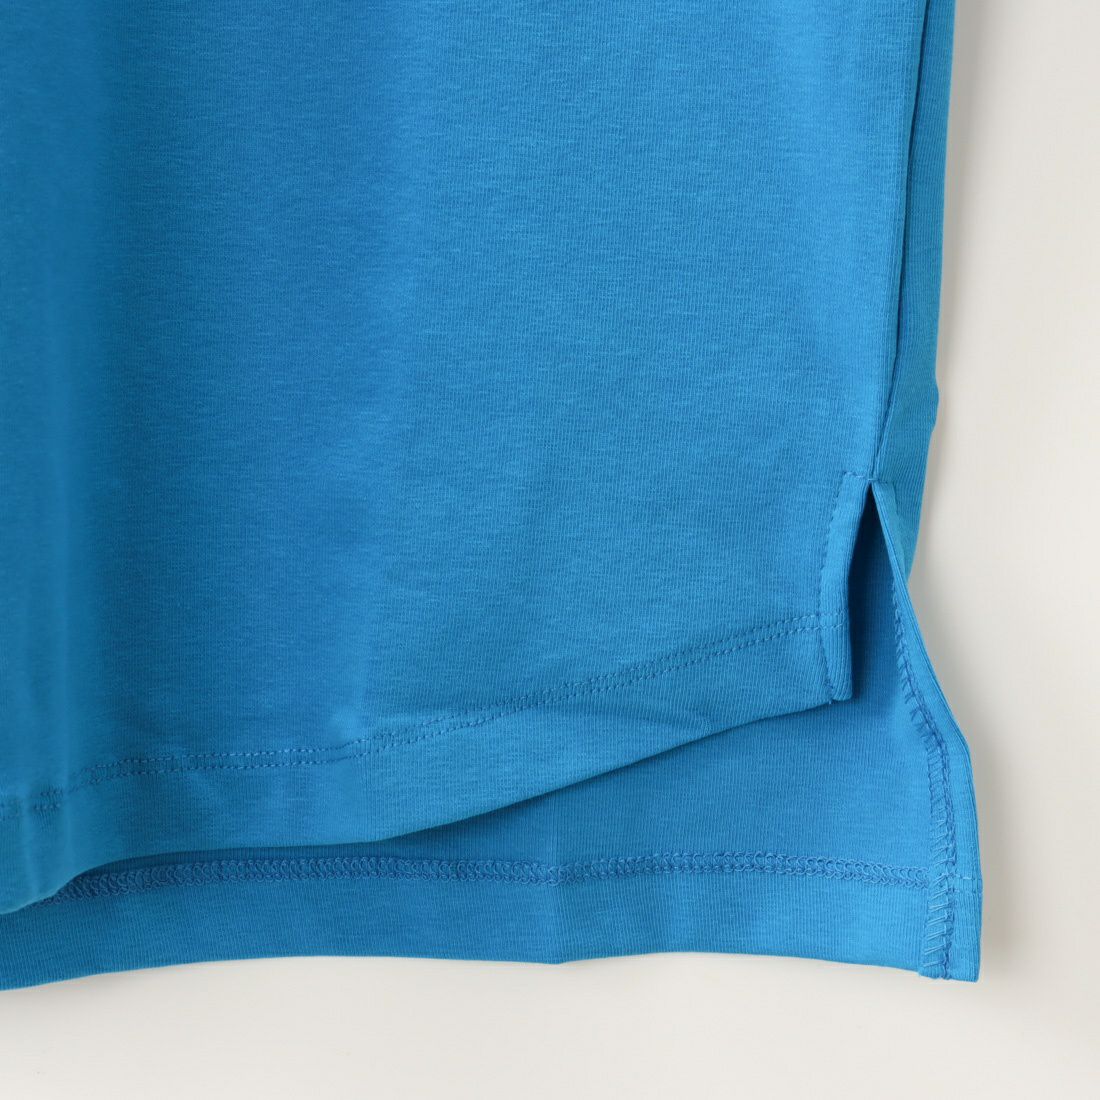 Maison de L'allure [メゾン ドゥ ラリュール] 厚盛りロゴ刺繍Tシャツ [23122021] TURQUOISE